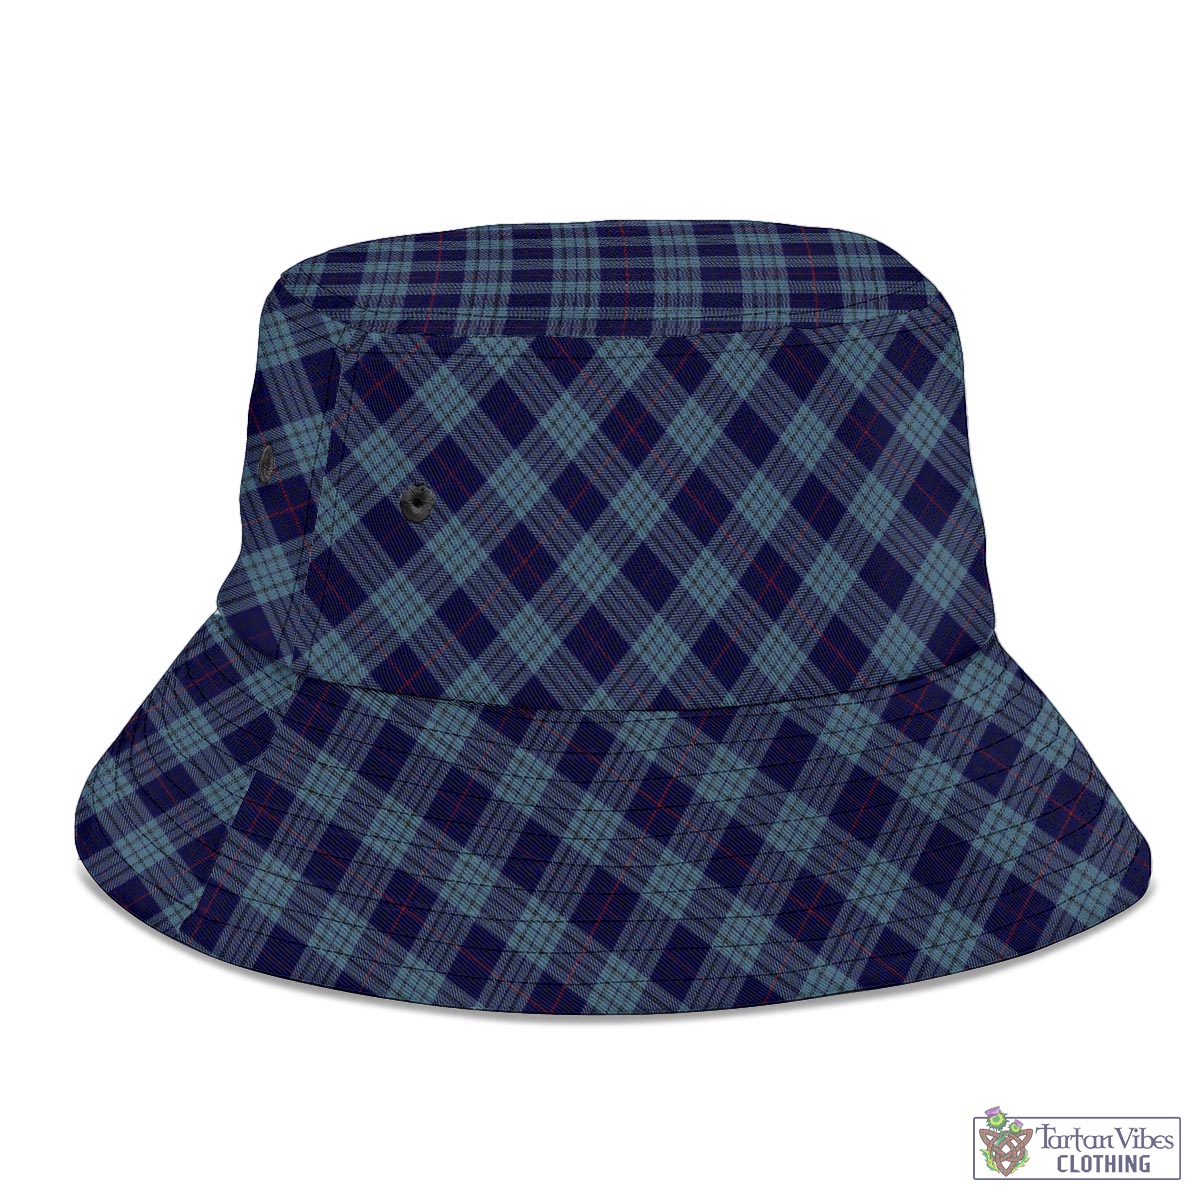 Tartan Vibes Clothing Roberts of Wales Tartan Bucket Hat